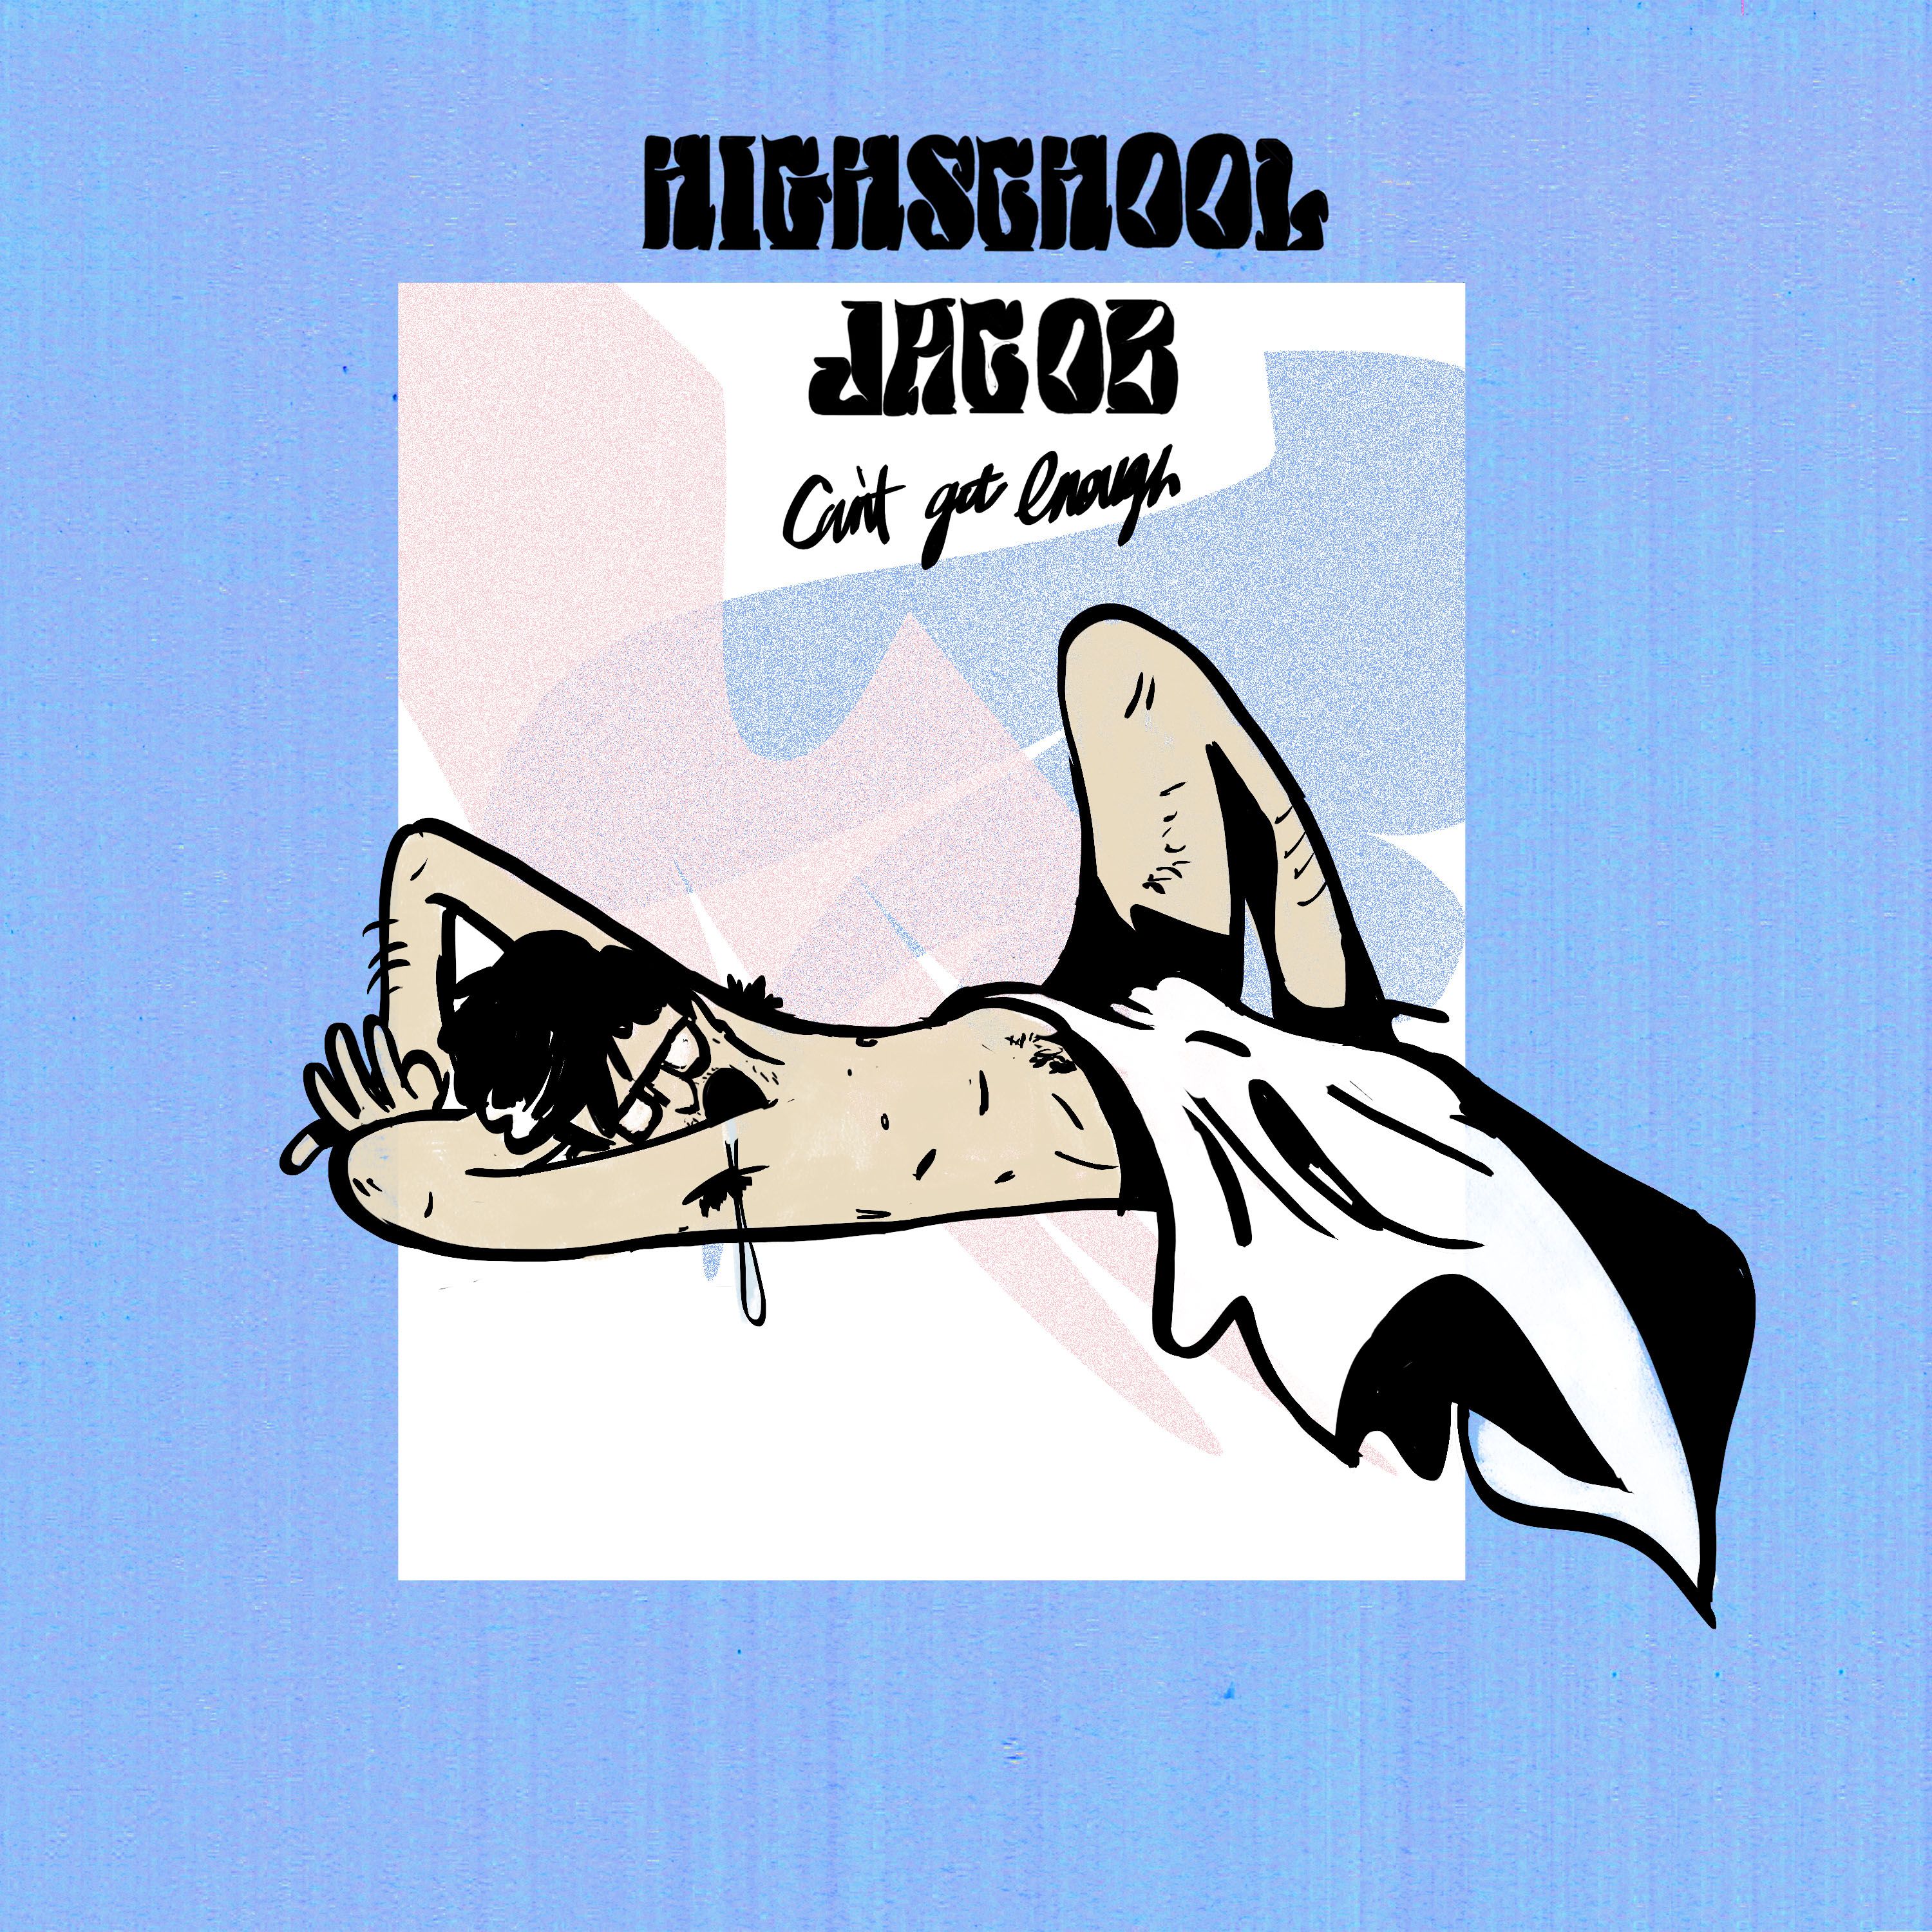 Highschool Jacob – “Can’t Get Enough”